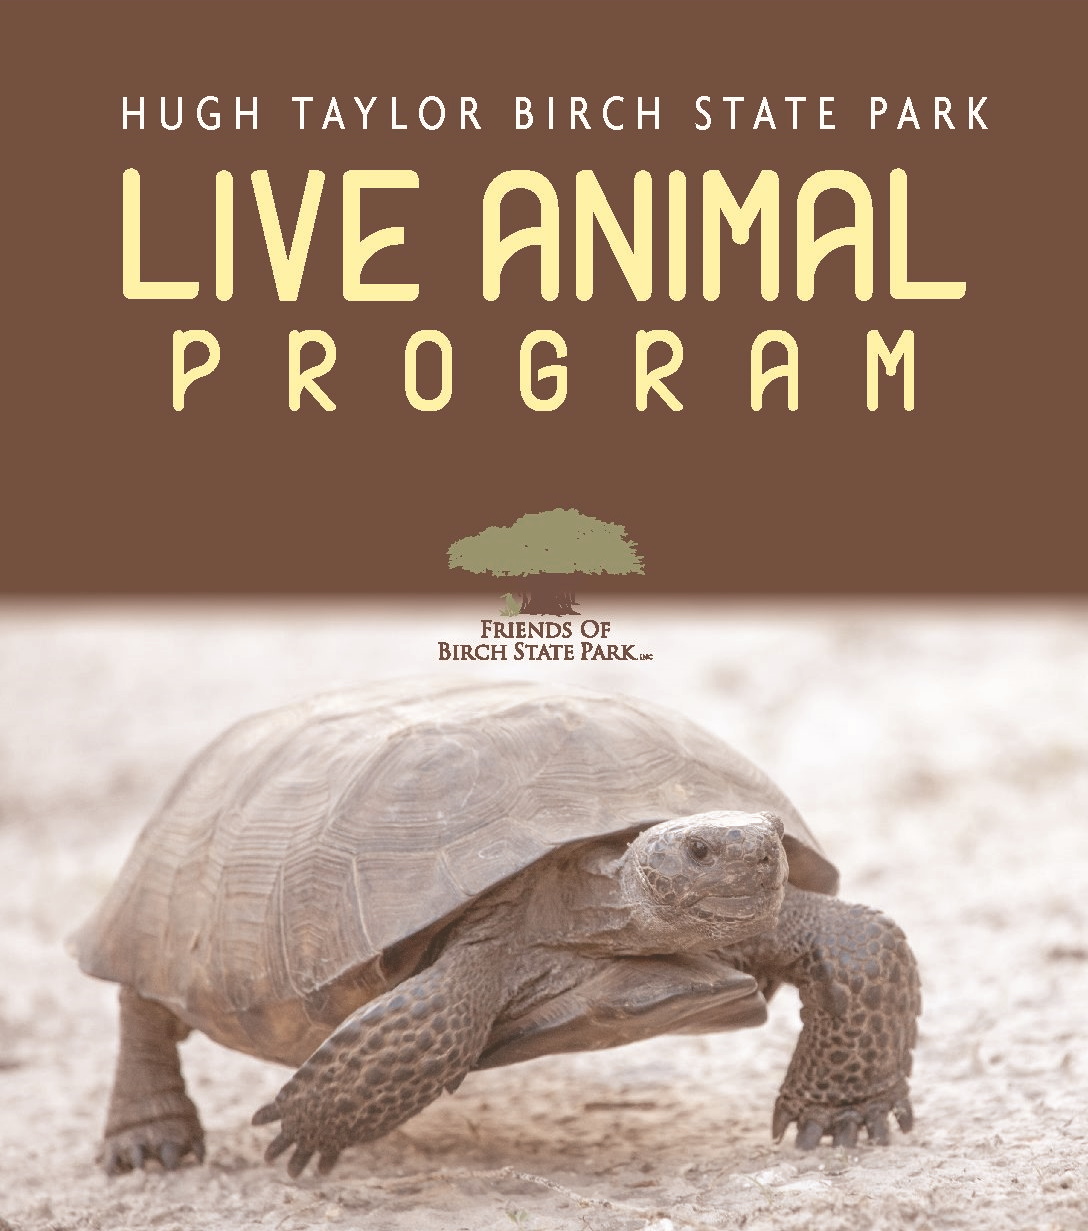 Hugh Taylor Birch State Park Live Animal Program Poster